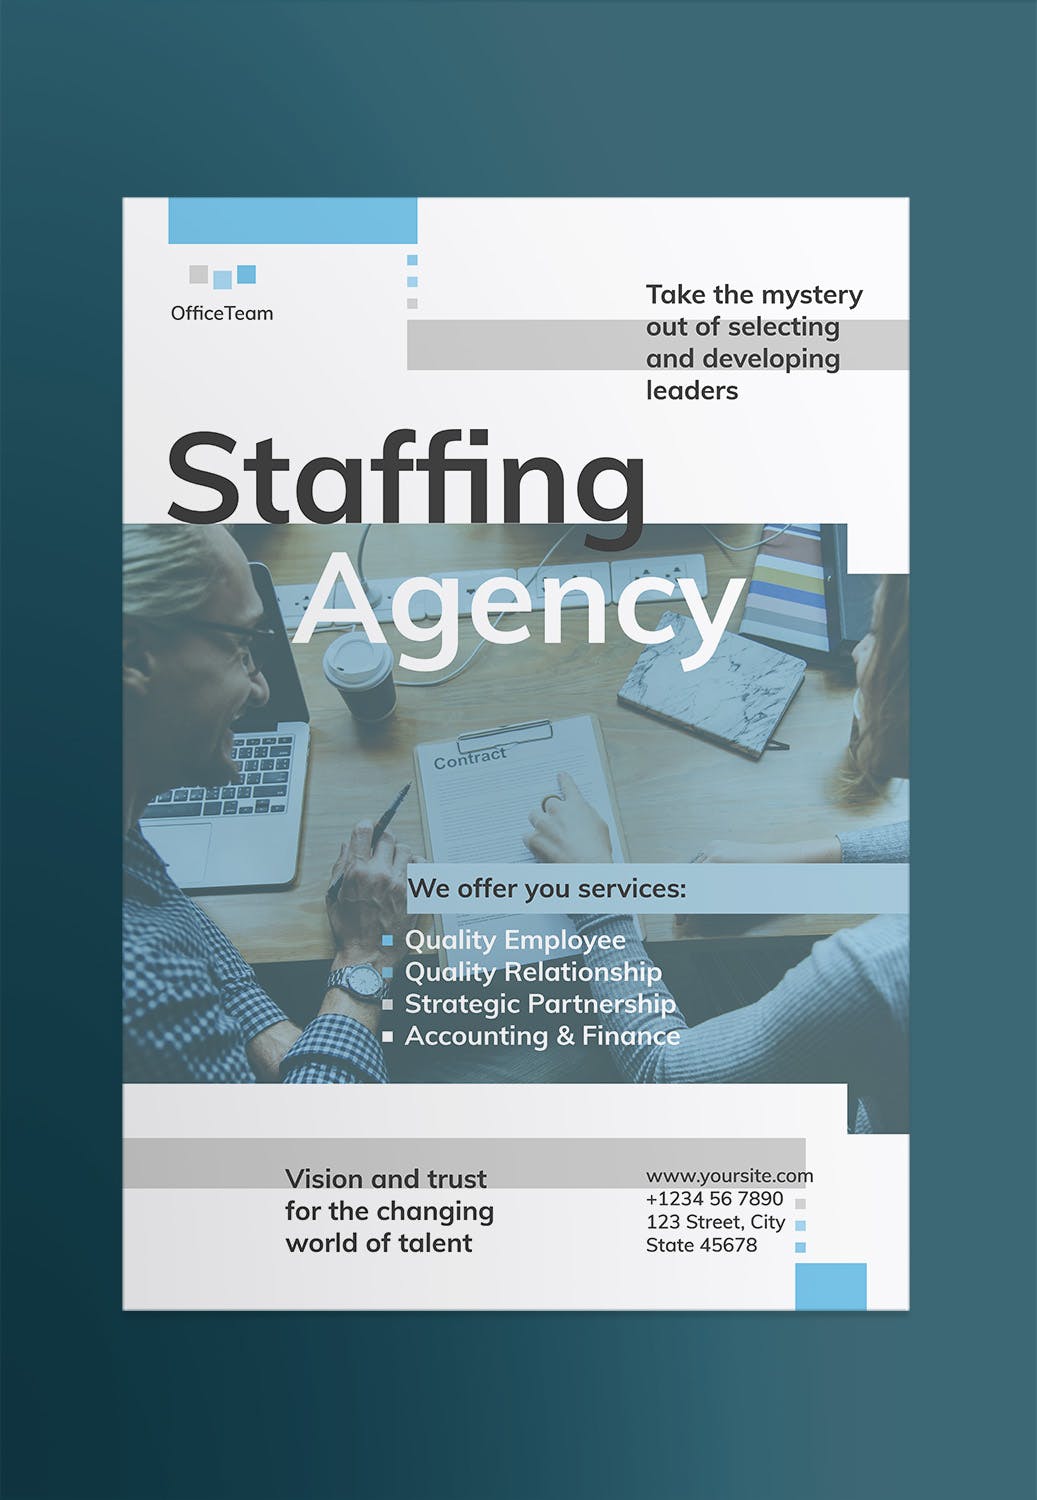 人力资源市场宣传海报设计模板 Staffing Agency Poster插图(1)